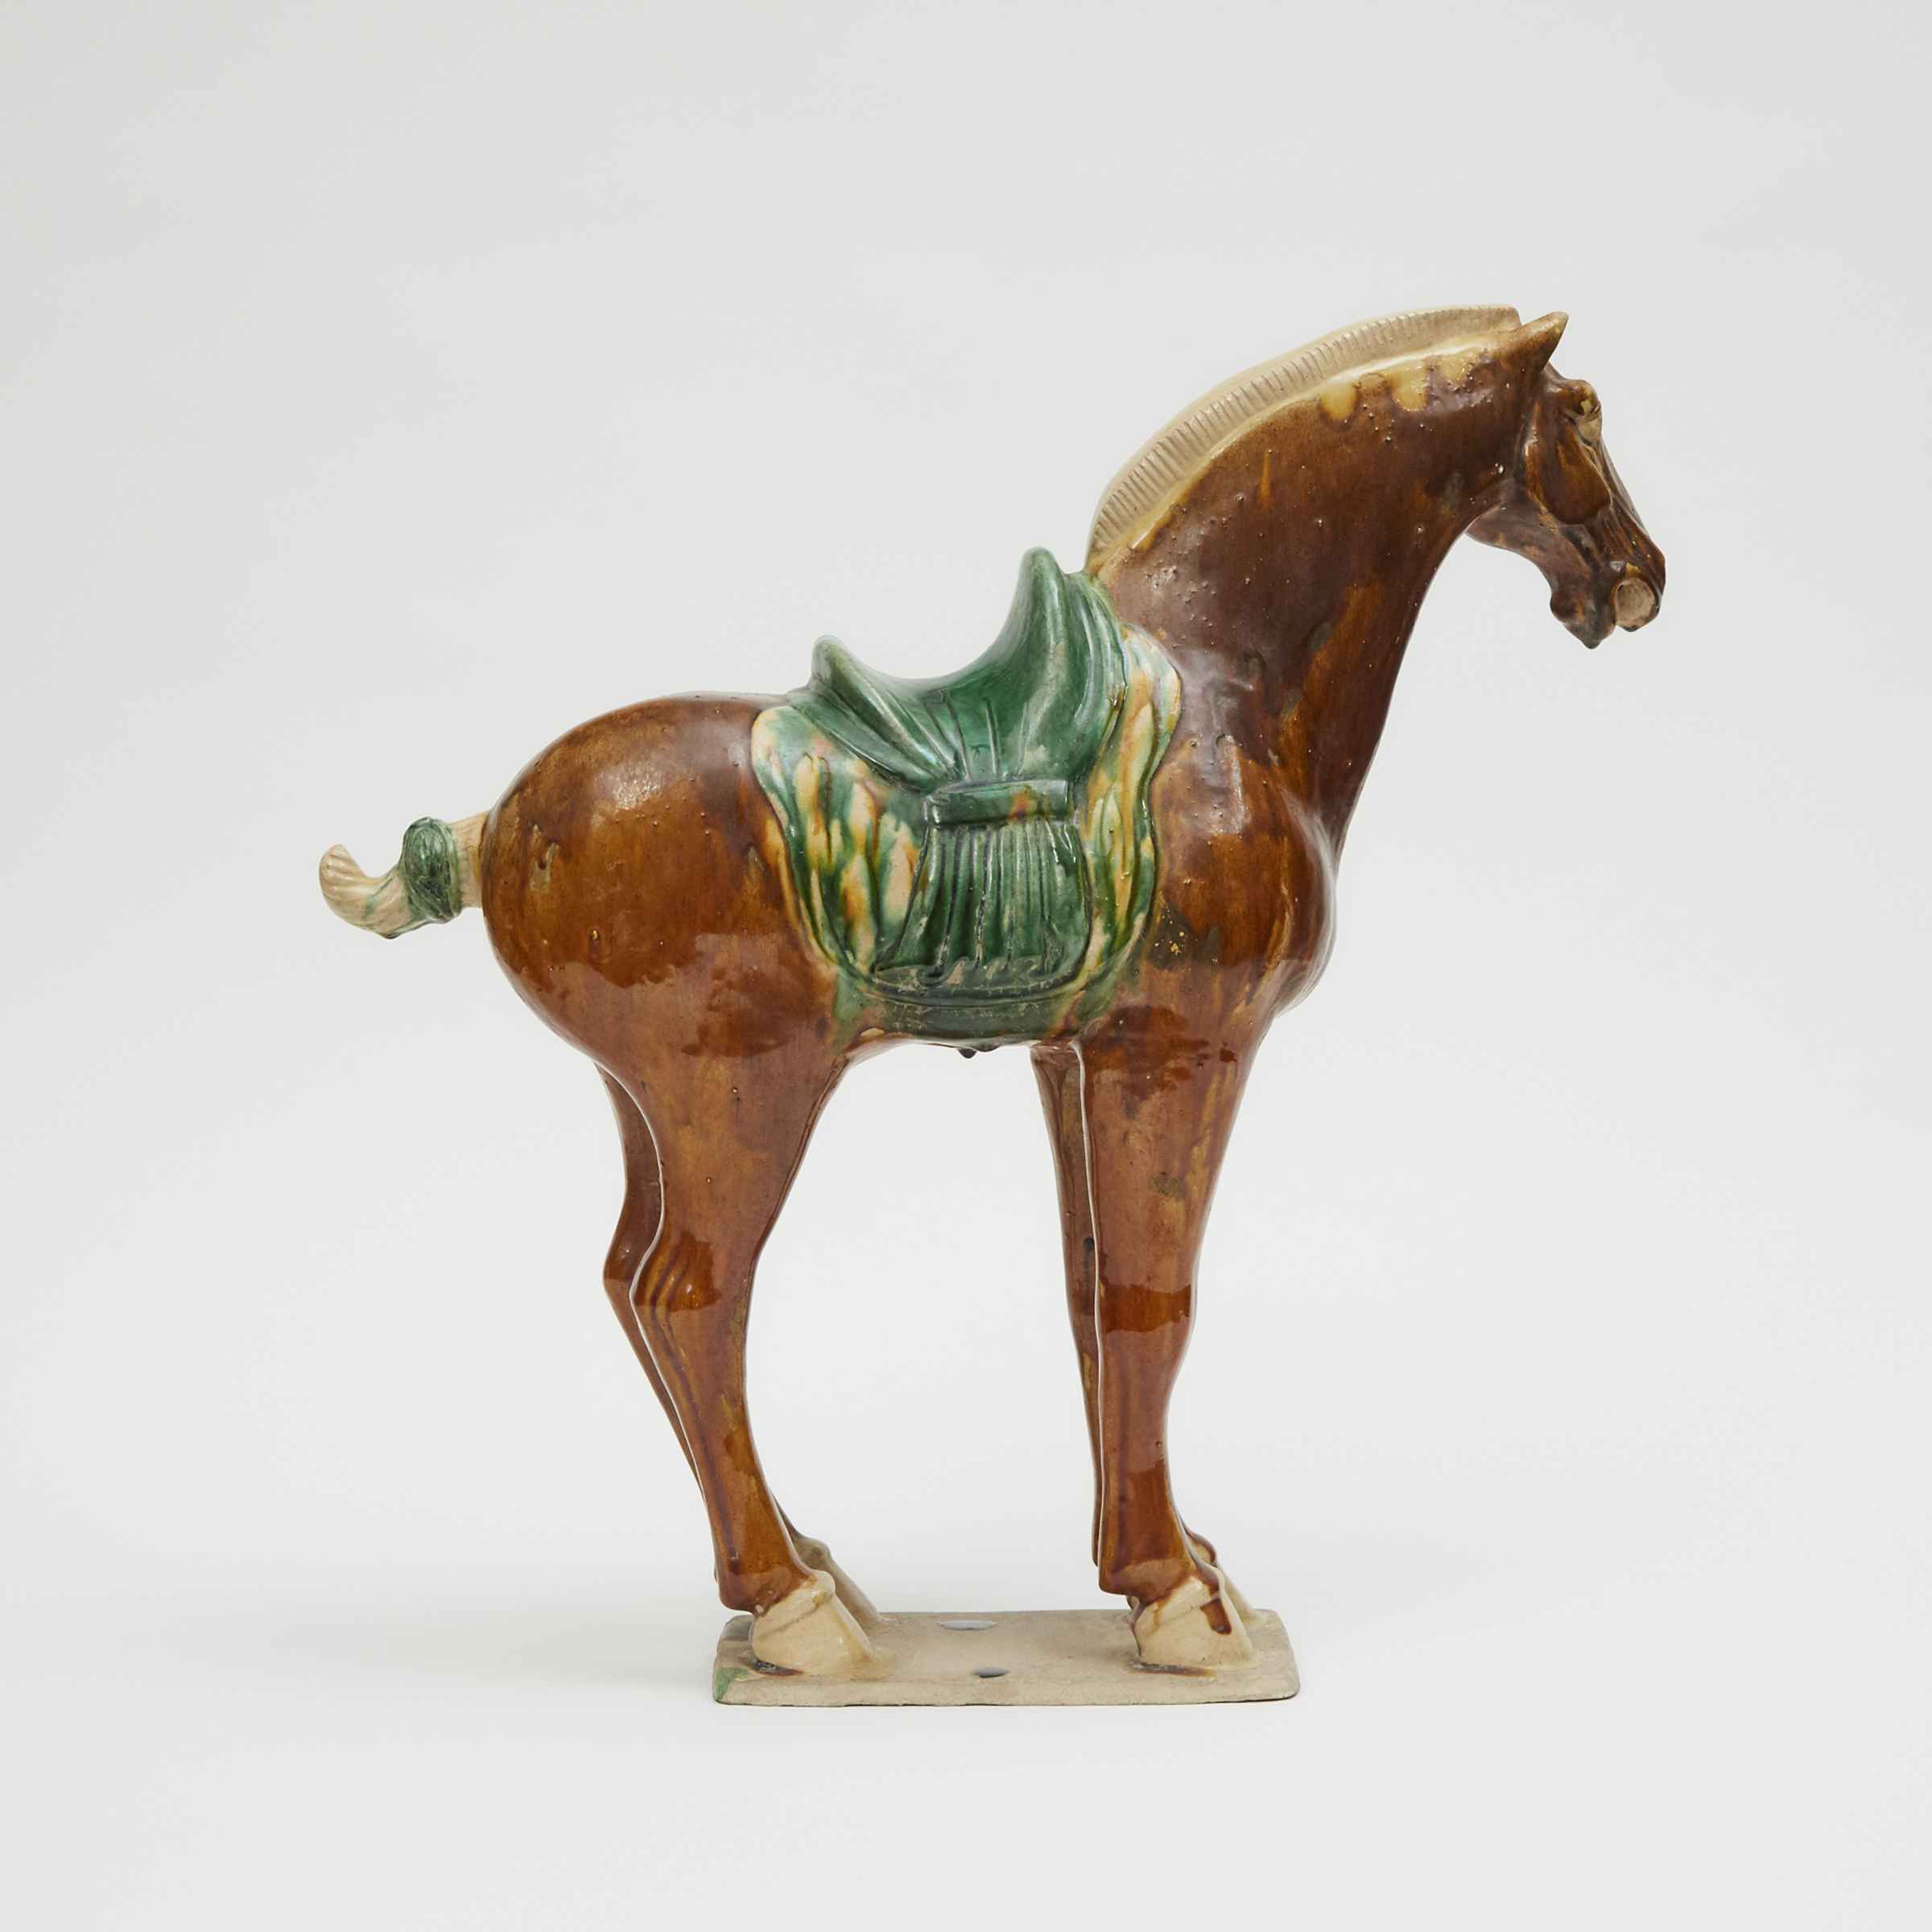 A Sancai-Glazed Pottery Figure of a Horse